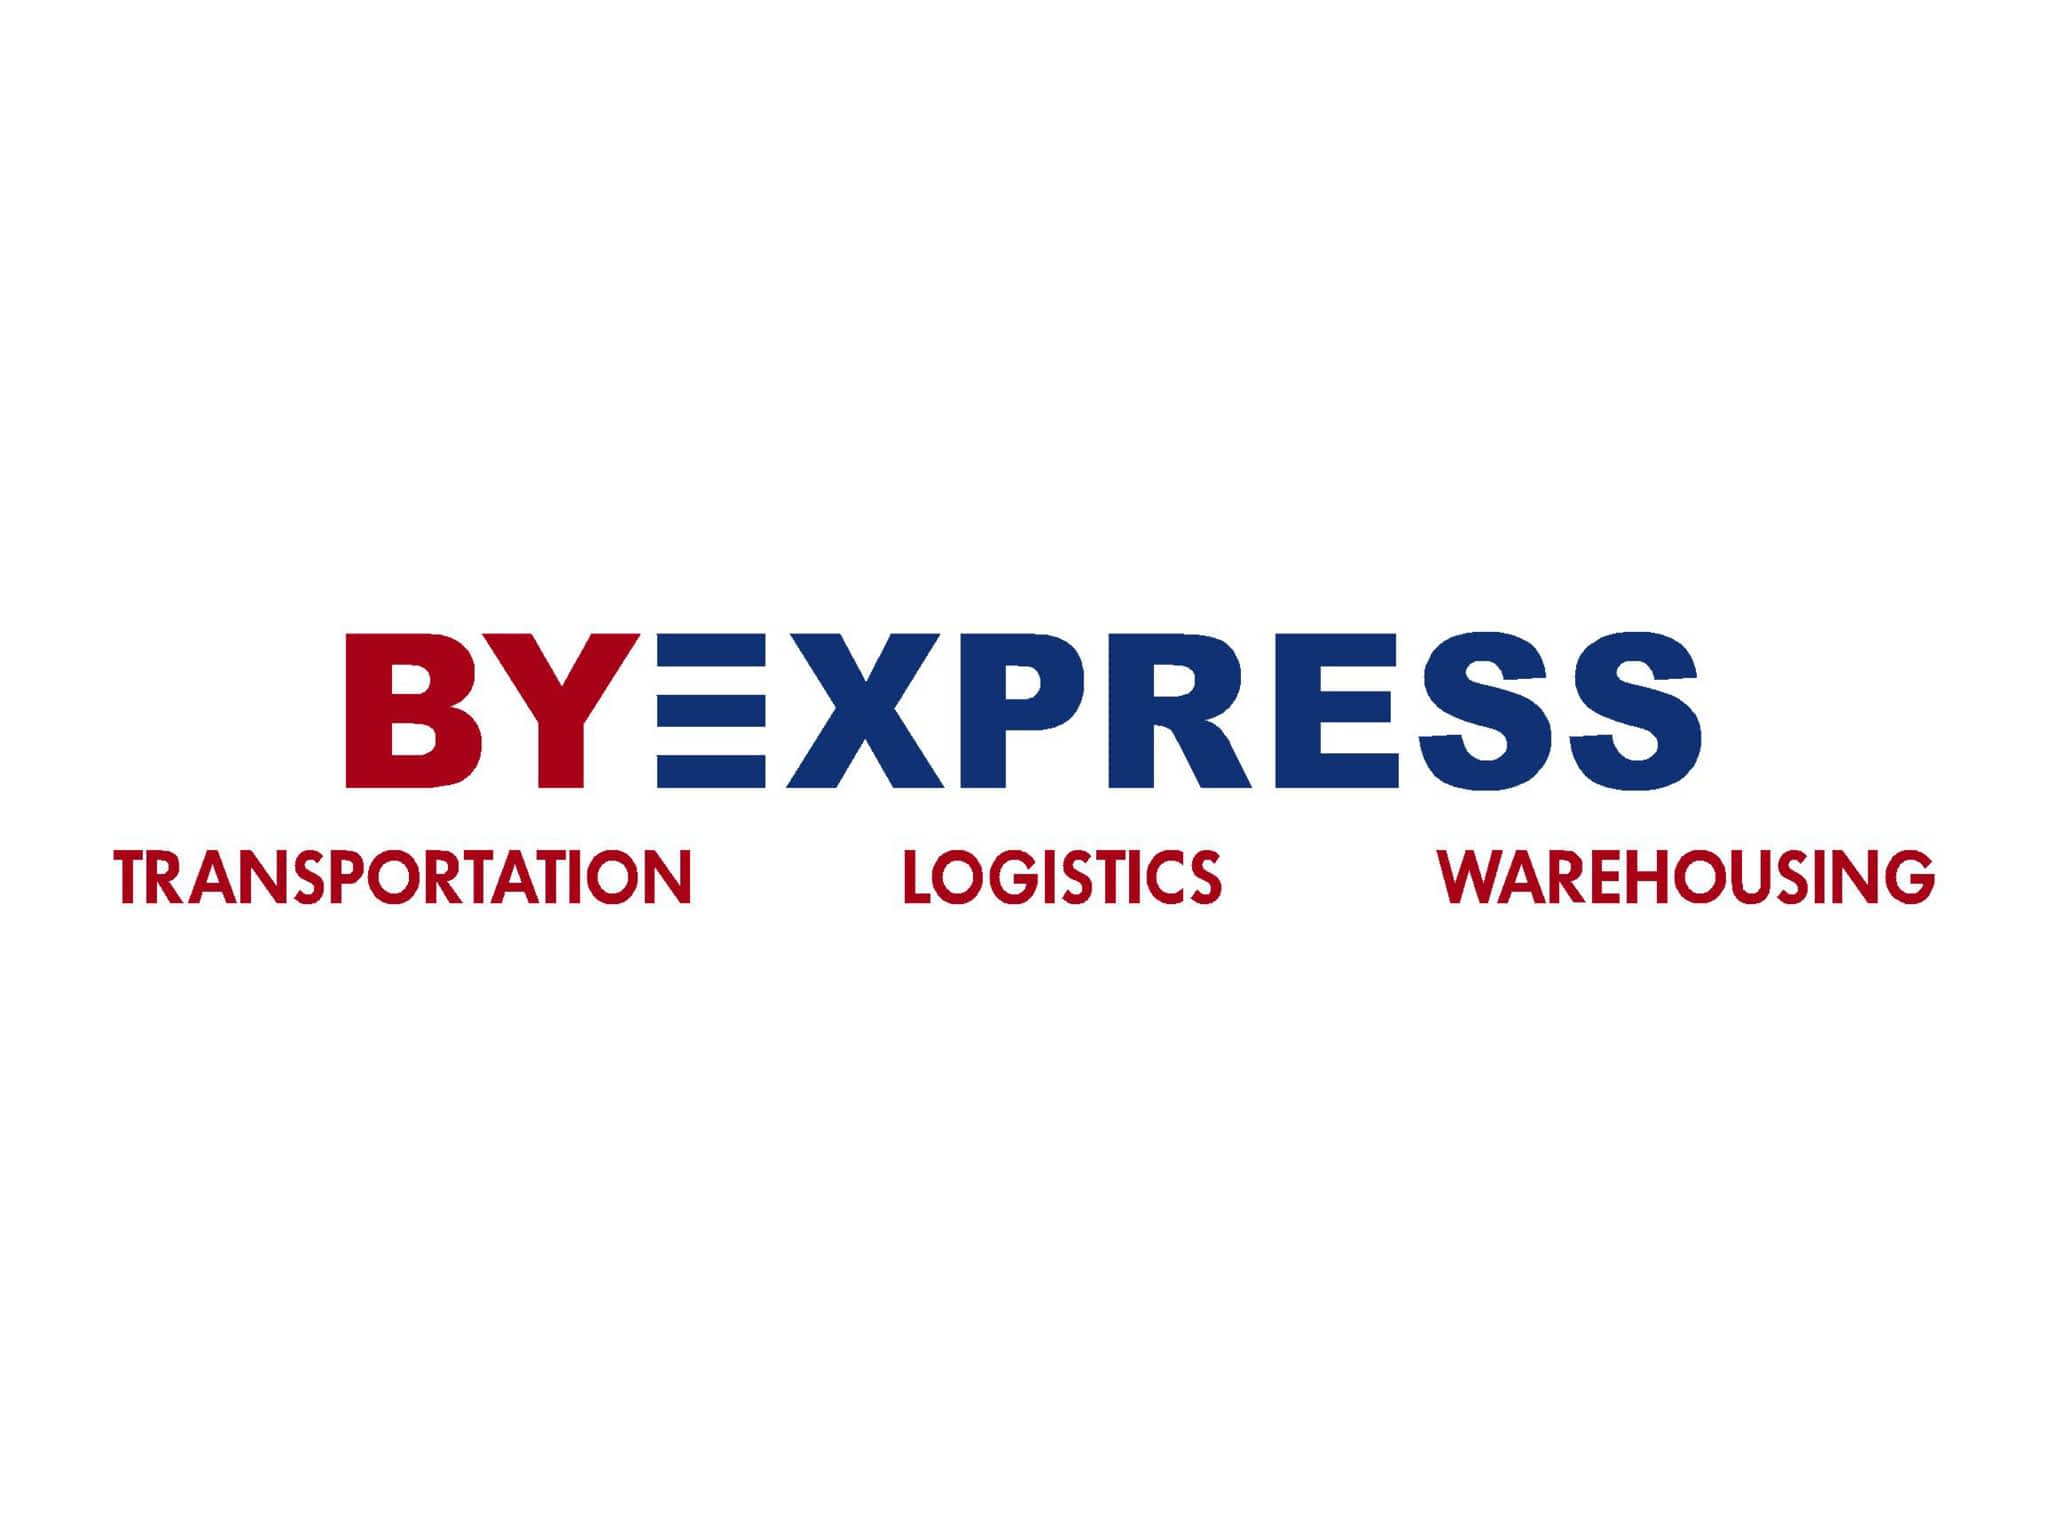 photo By Express Logistics & Transportation